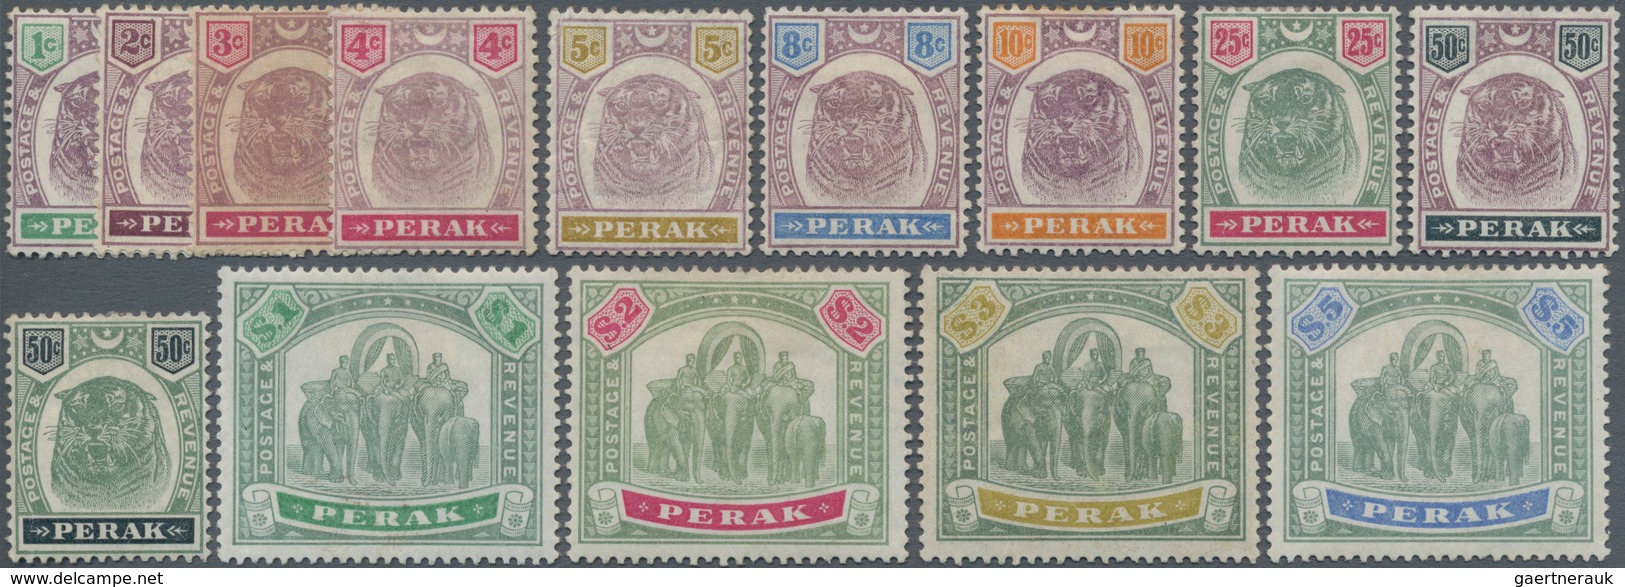 Malaiische Staaten - Perak: 1895, PERAK Set Of 14 Values Up To $5 Green And Ultramarine, All Mint Hi - Perak